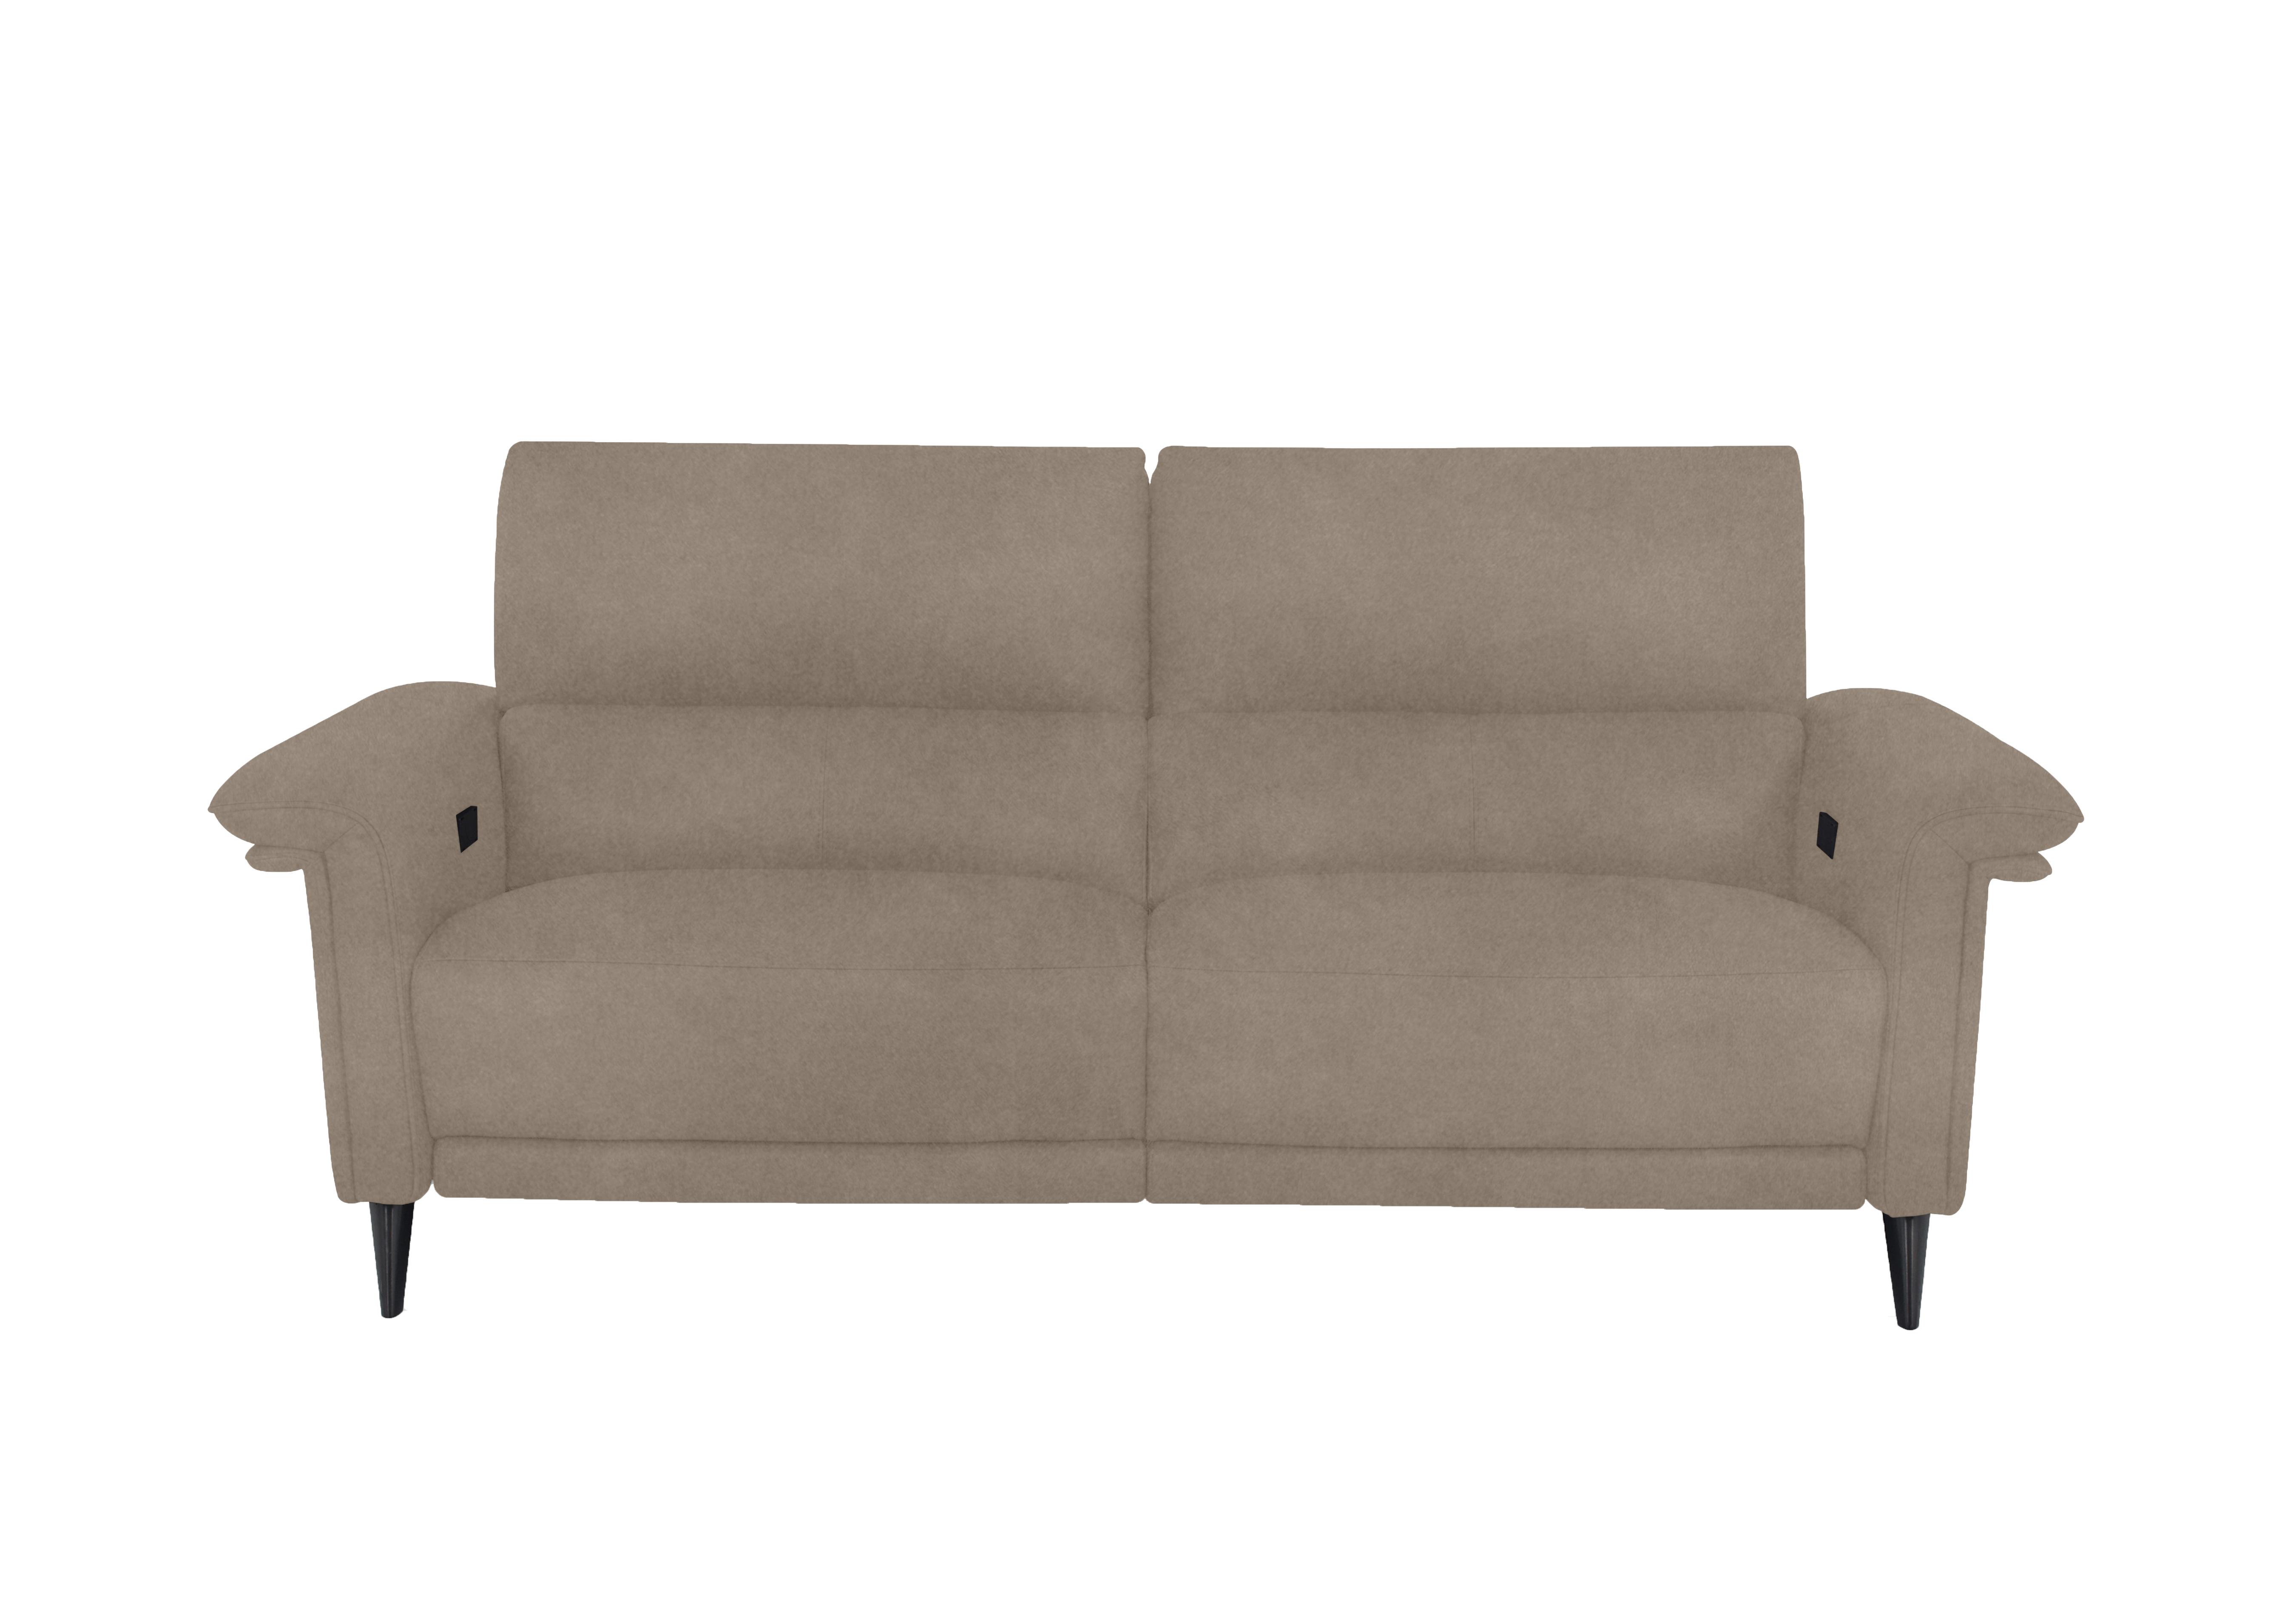 Huxley 3 Seater Fabric Sofa in Fab-Meg-R32 Light Khaki on Furniture Village